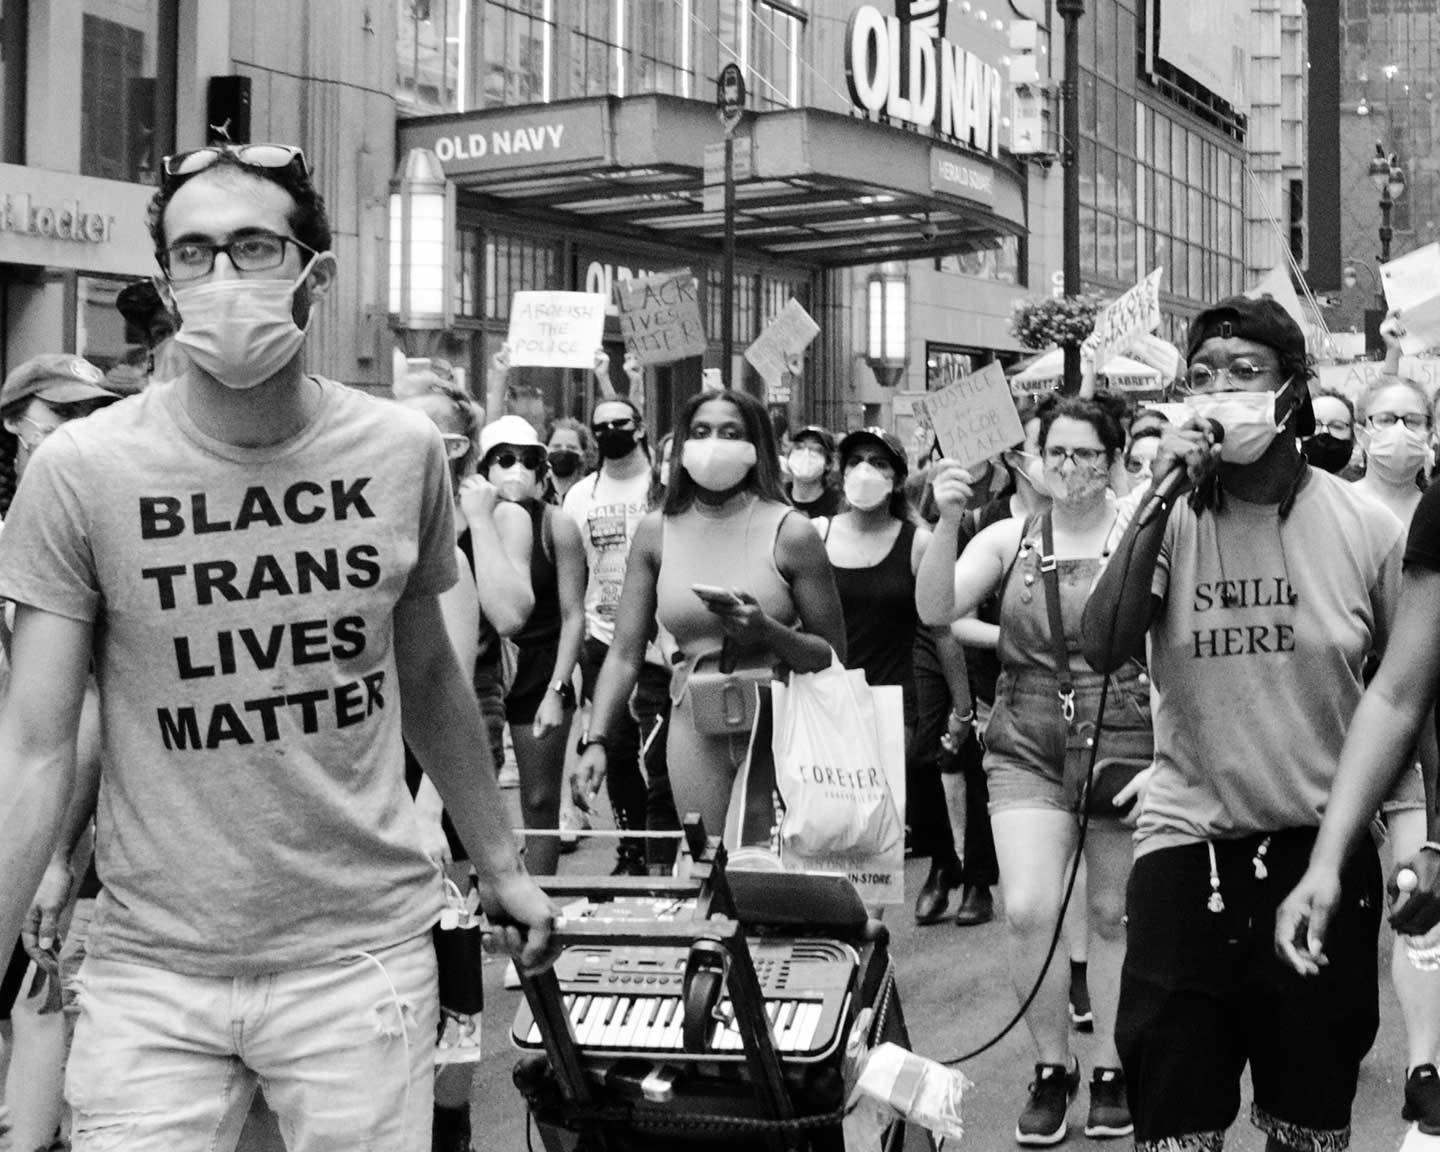 A man wearing a black trans lives matter shirt at a protest